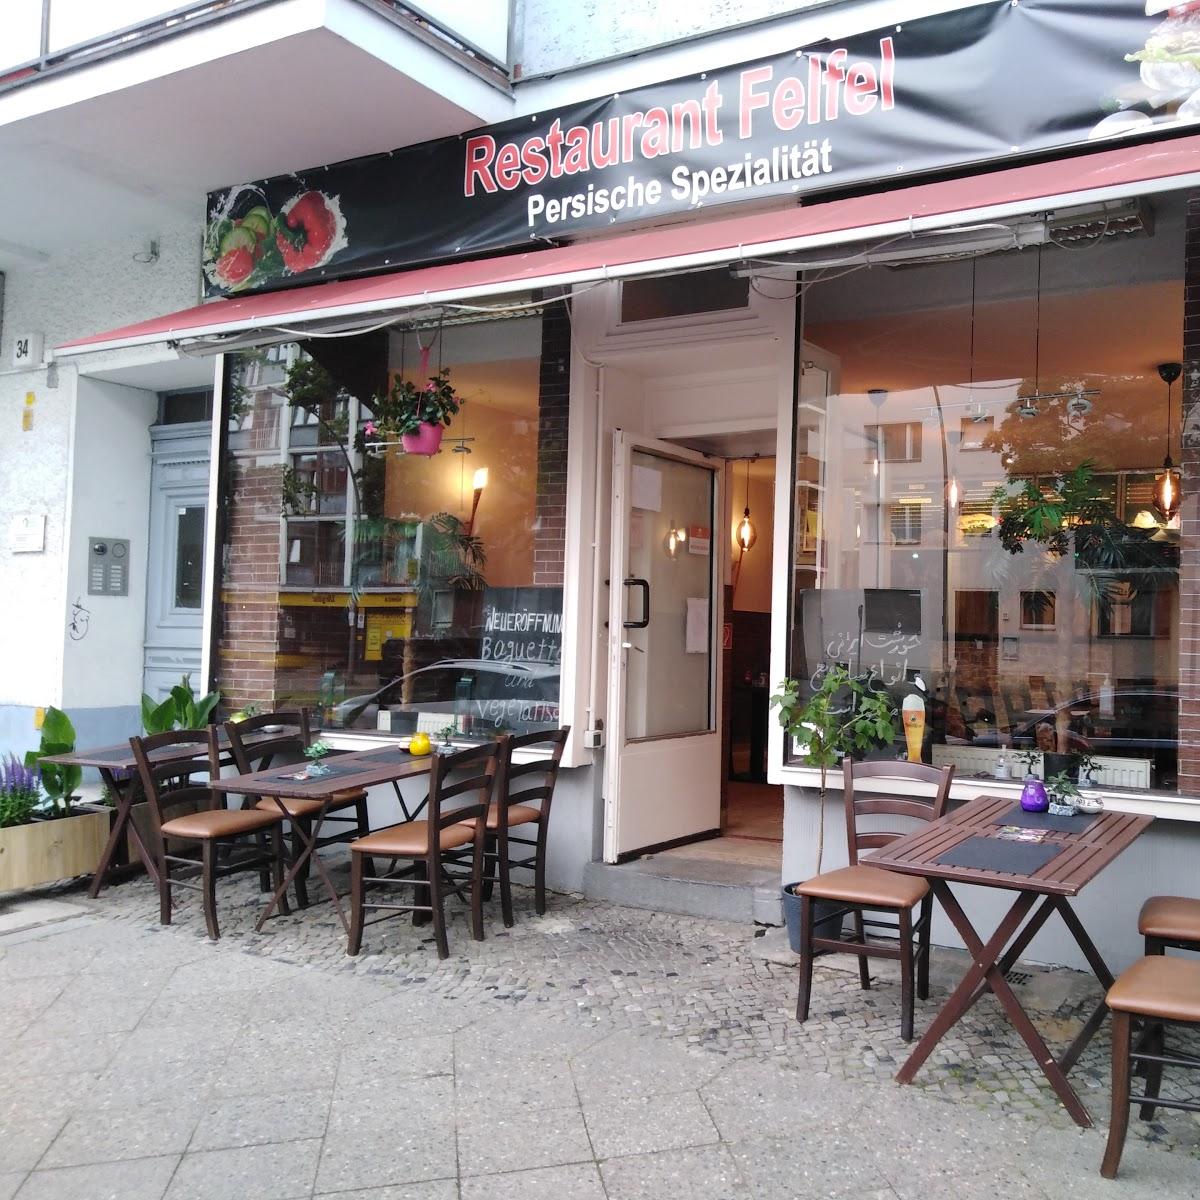 Restaurant "Restaurant Felfel (Persische Spezialitäten)" in Berlin